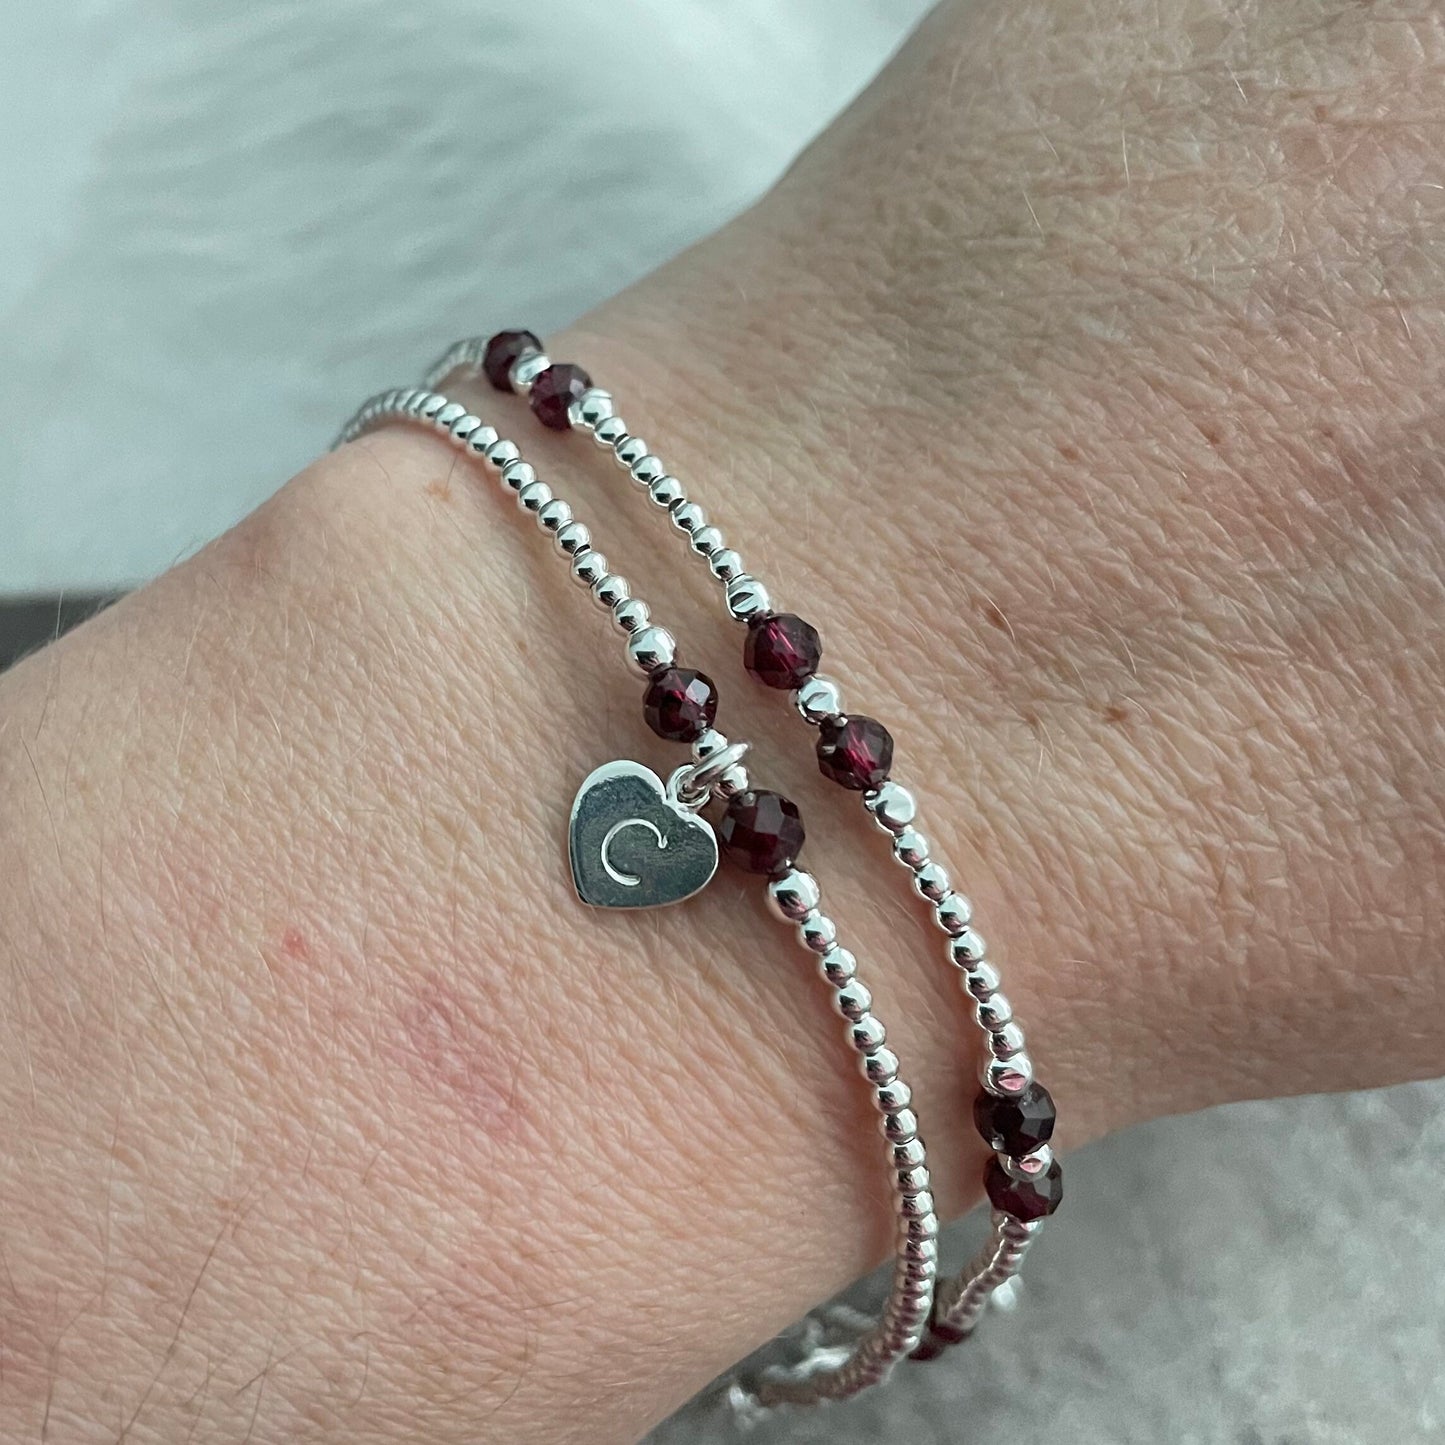 Personalised Bracelet Set with Birthstone, Initial Bracelets